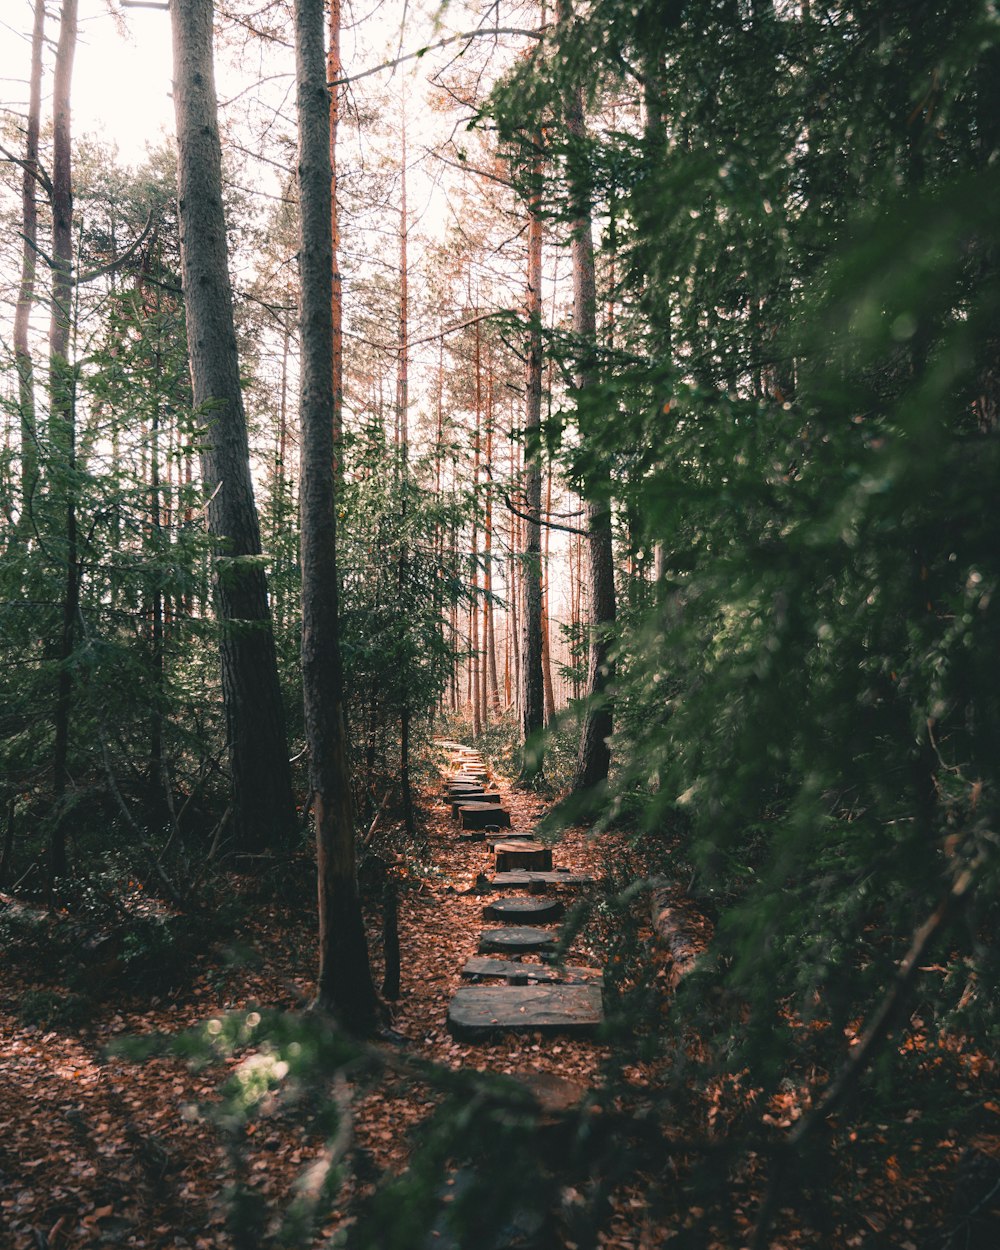 Un sendero en medio de un bosque rodeado de árboles